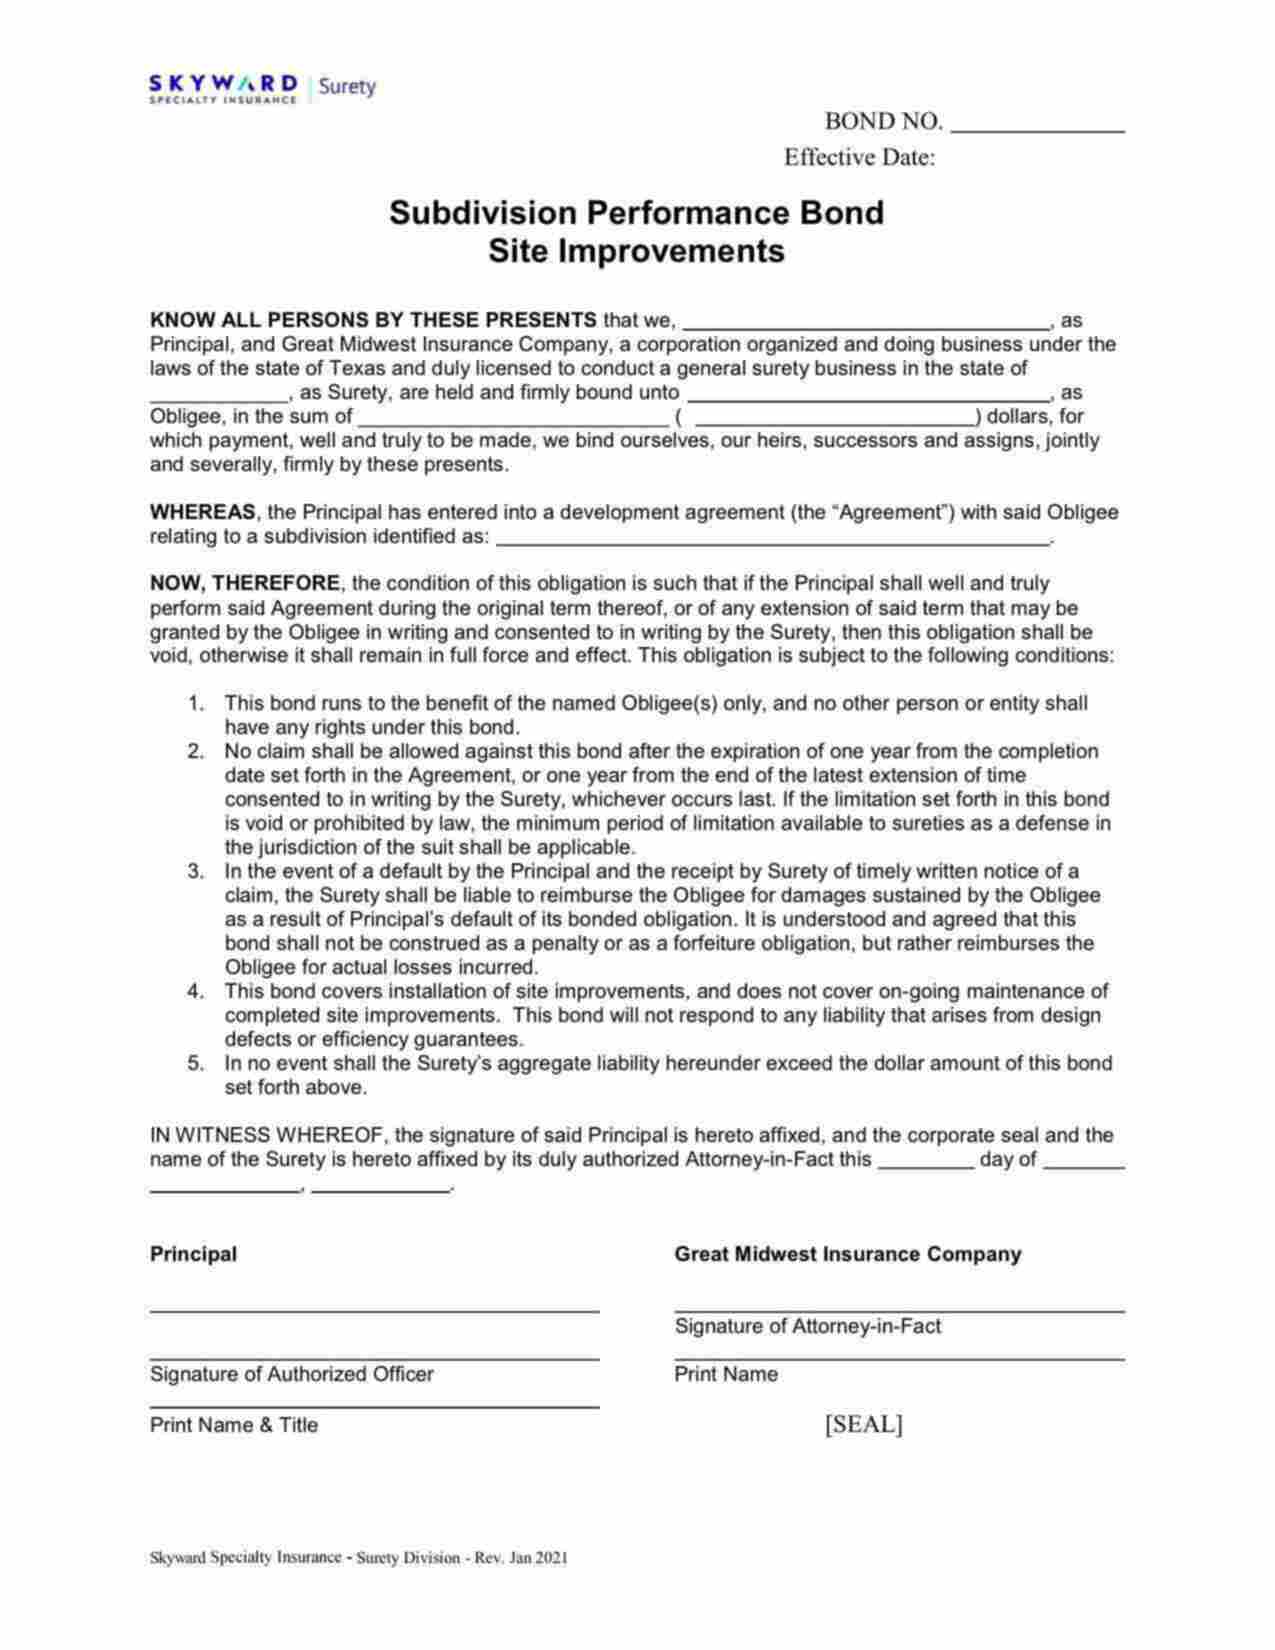 Indiana Subdivision, Site Improvement or Development Bond Form